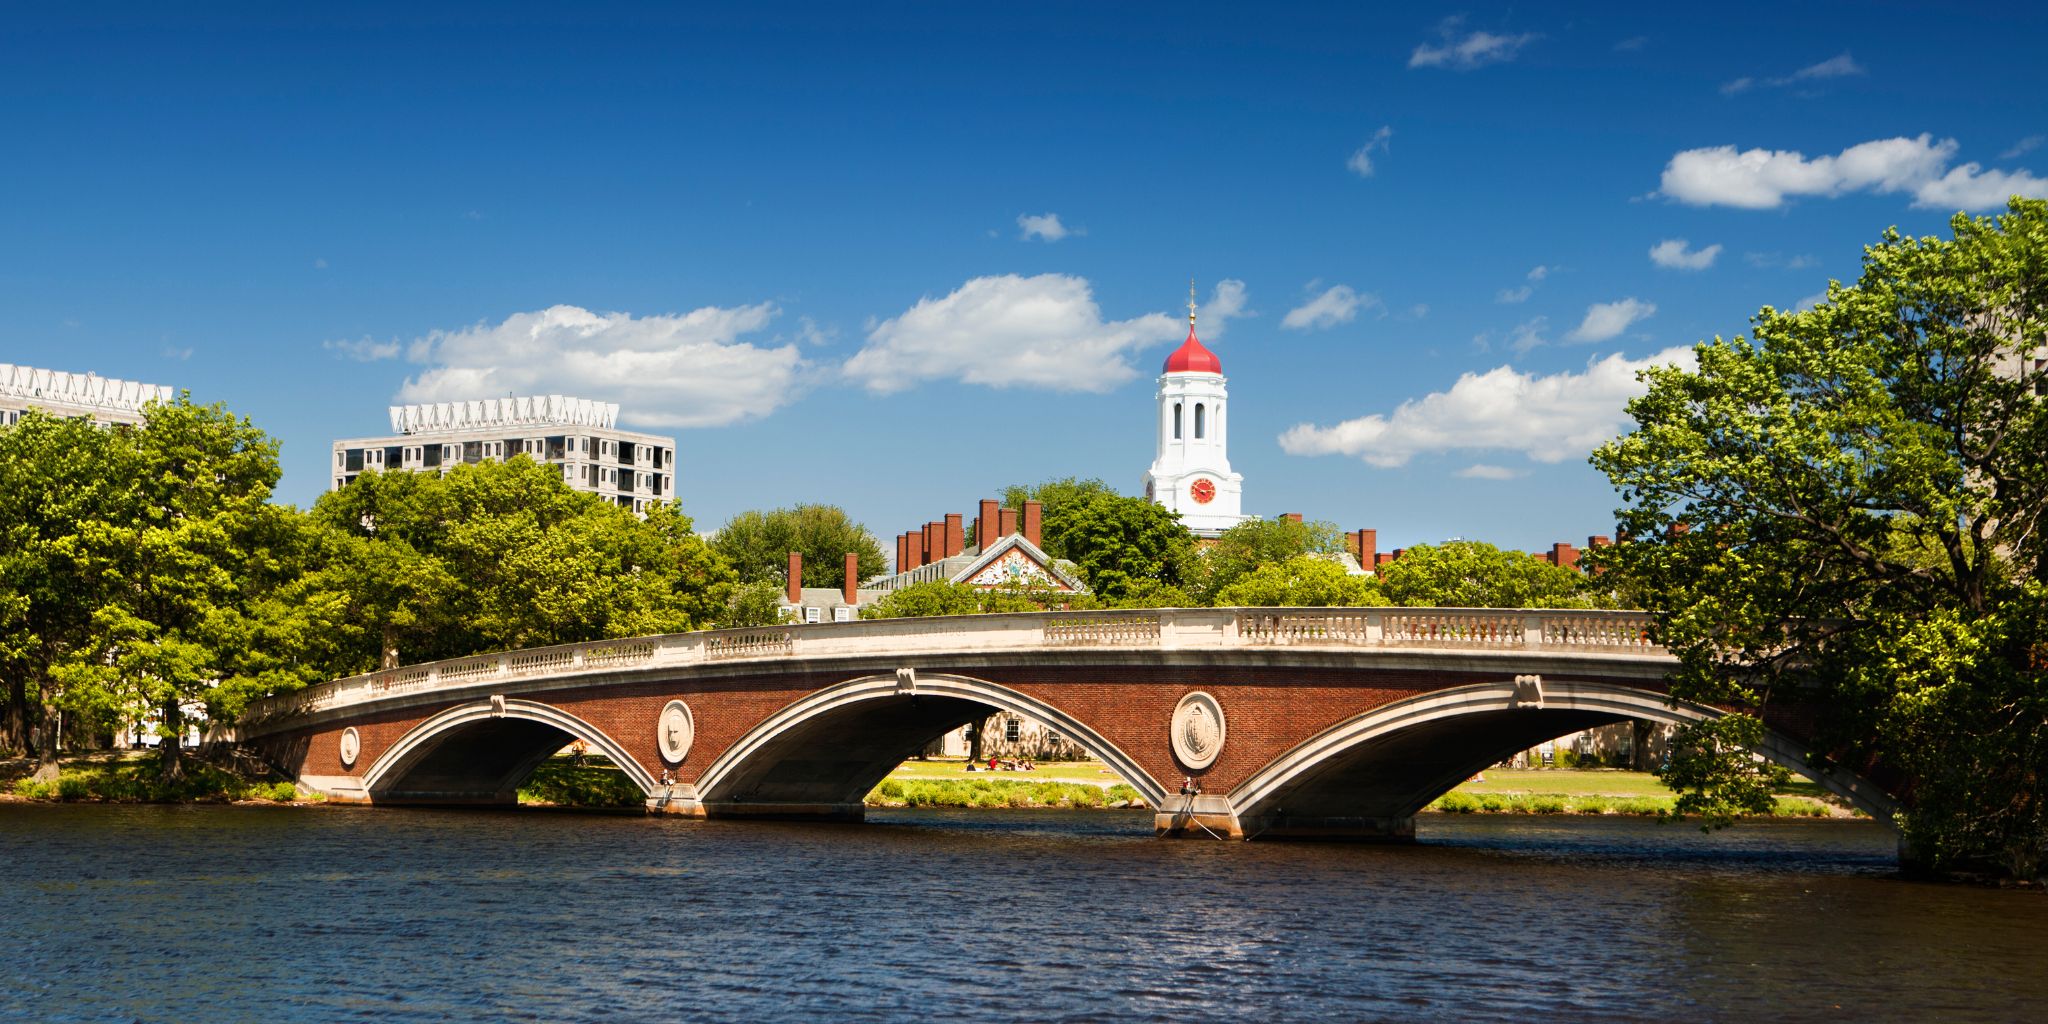 view of harvard university across river and bridge